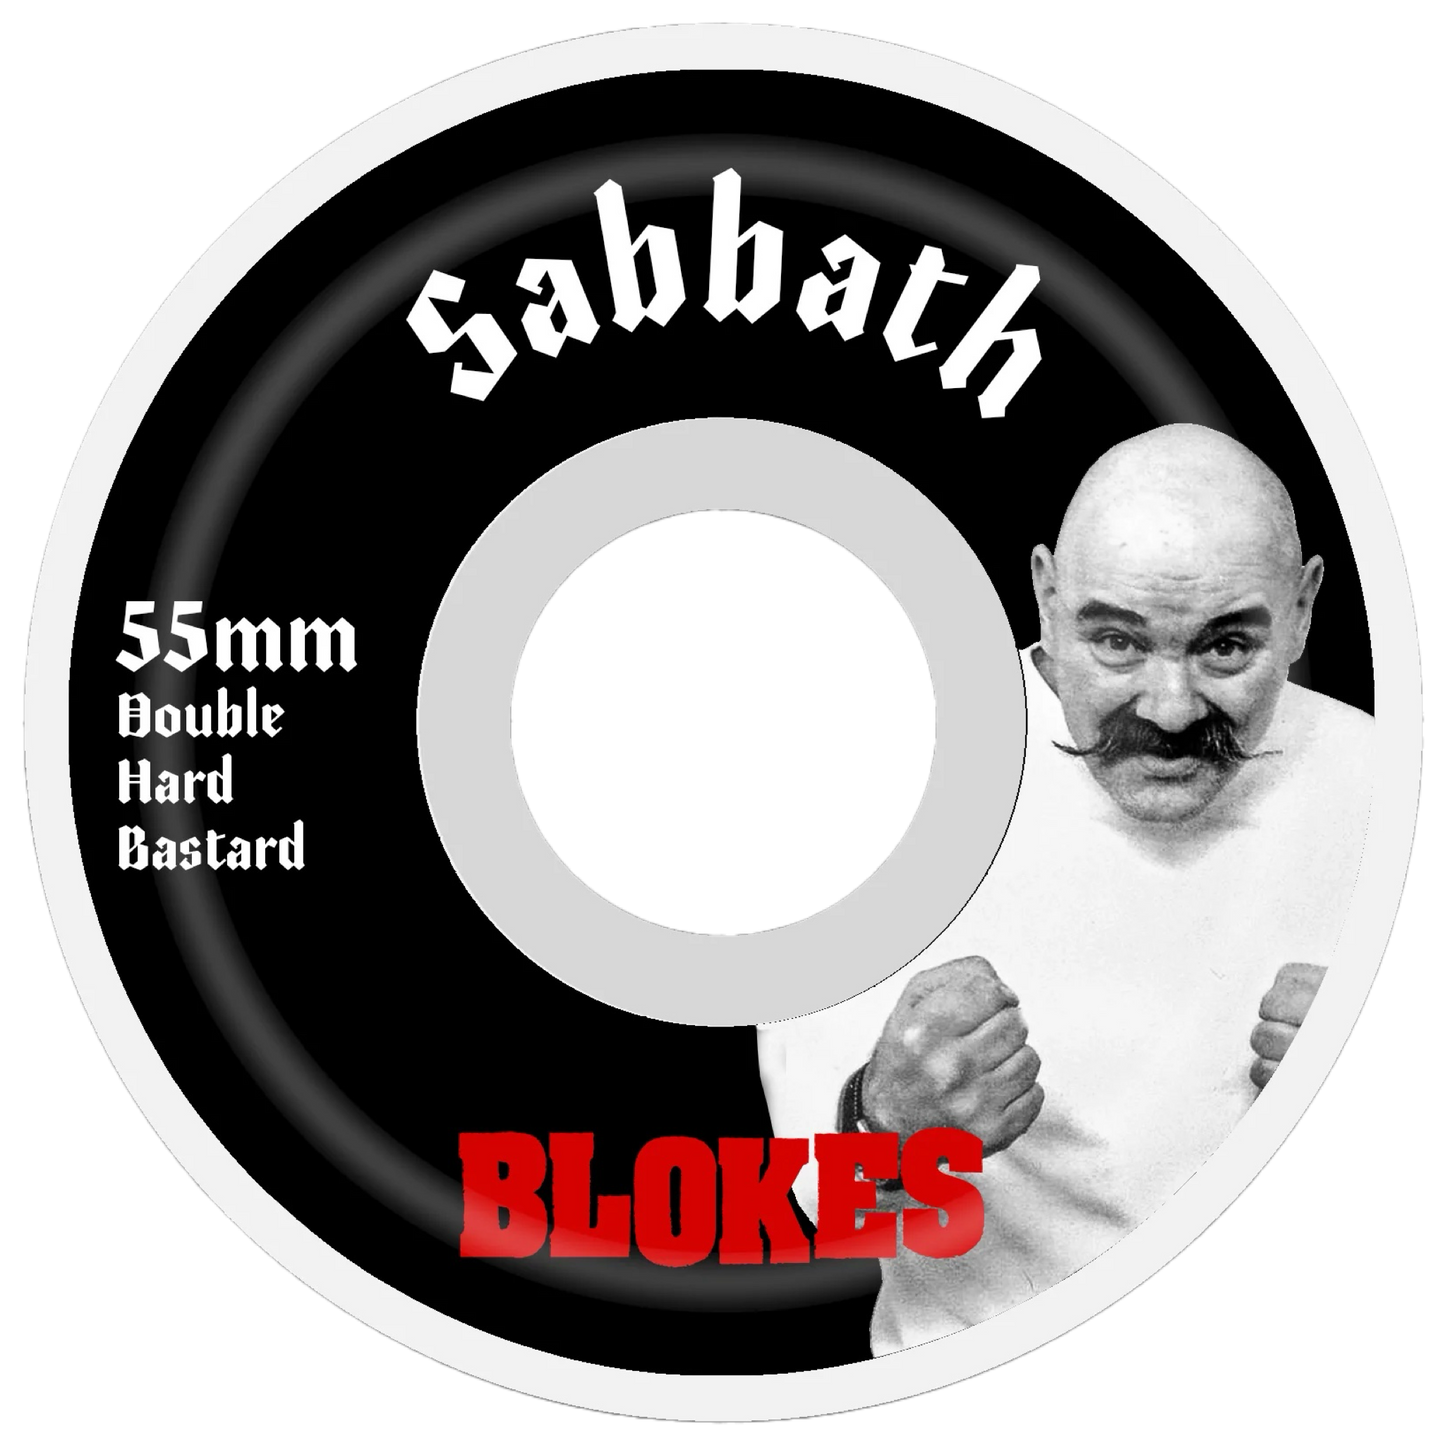 Sabbath Wheels - Sabbath x Blokes DHB 55mm Wheels